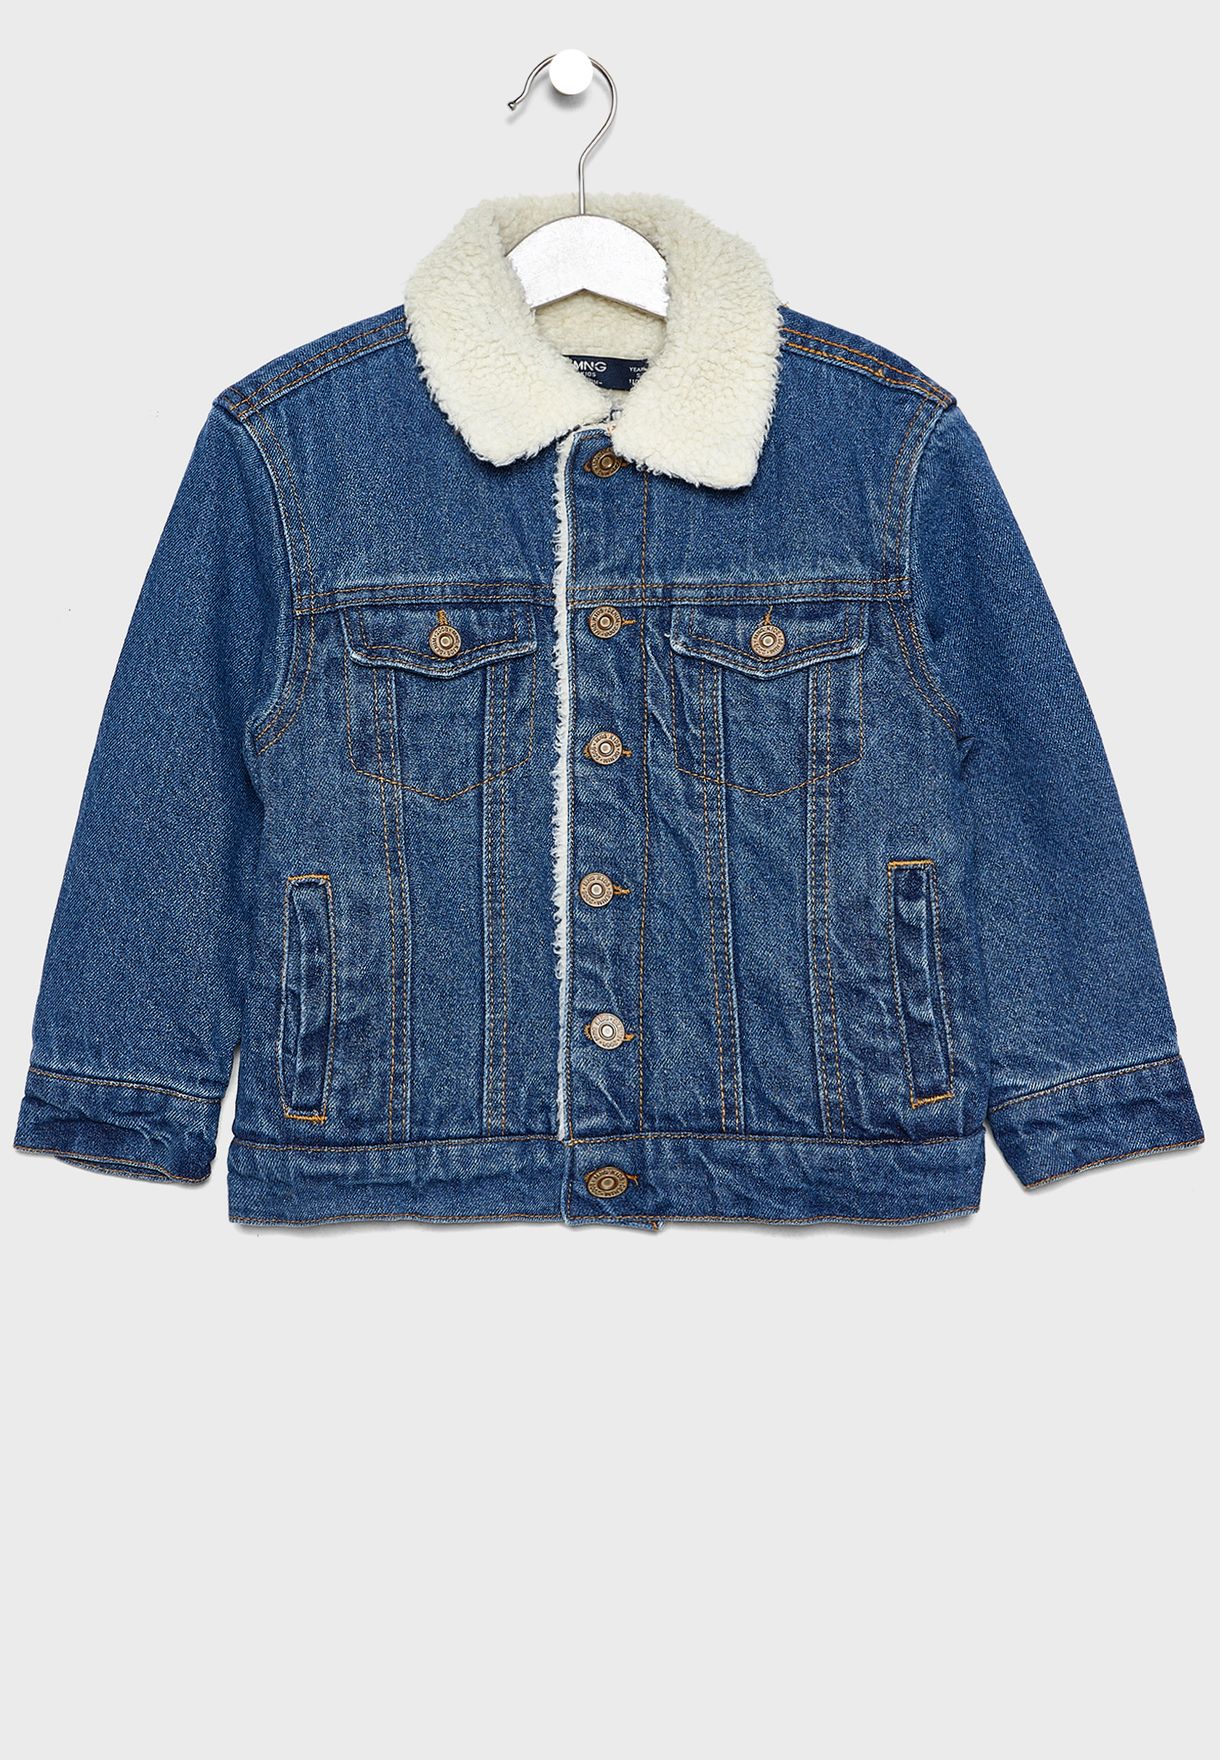 discount 85% KIDS FASHION Jackets Jean Blue 7Y Mango light jacket 